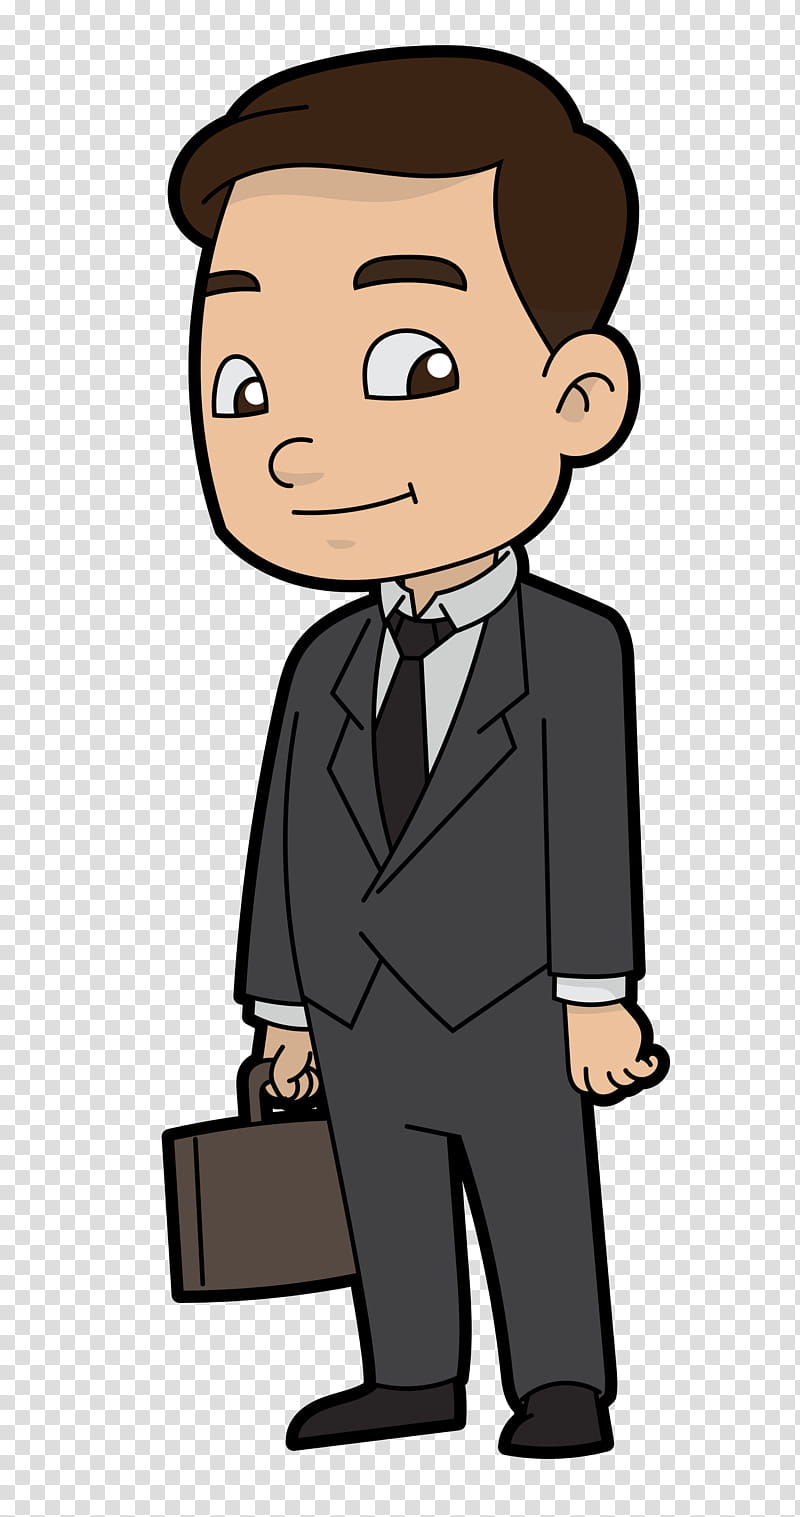 Business Man, Businessperson, Company, Human, Cartoon, Formal Wear, Tuxedo, Suit transparent background PNG clipart